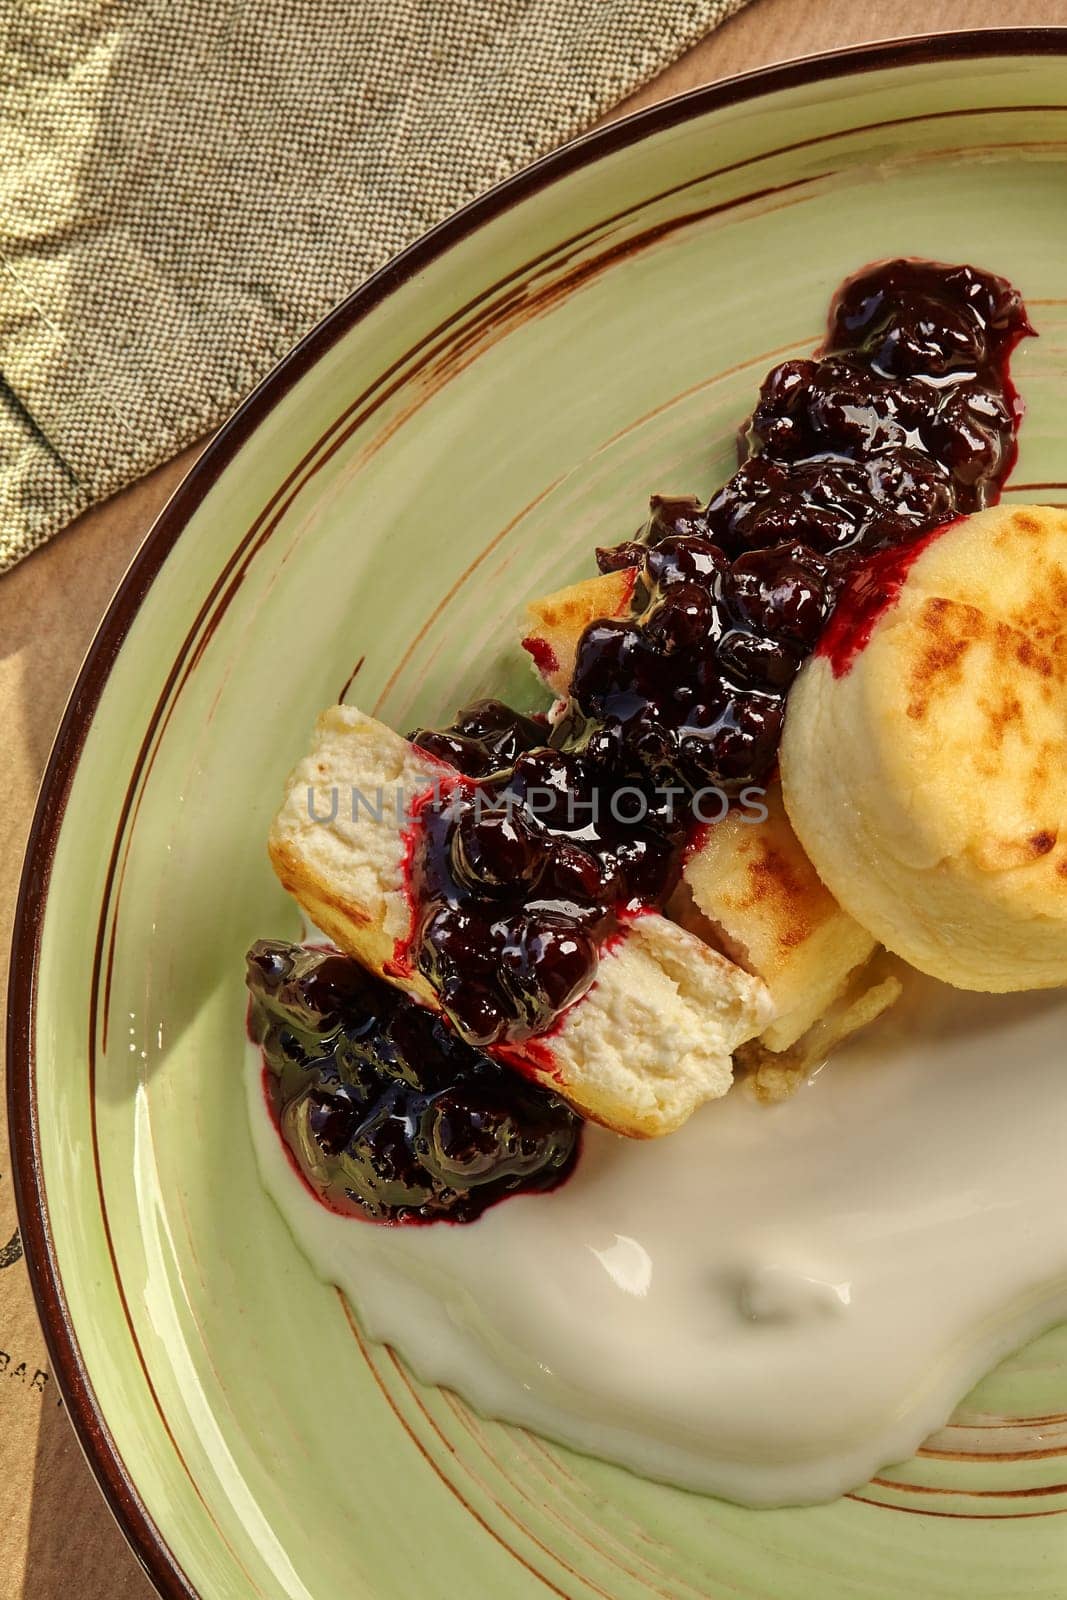 Homemade sweet syrniki ith creamy cheese cream and berries by nazarovsergey